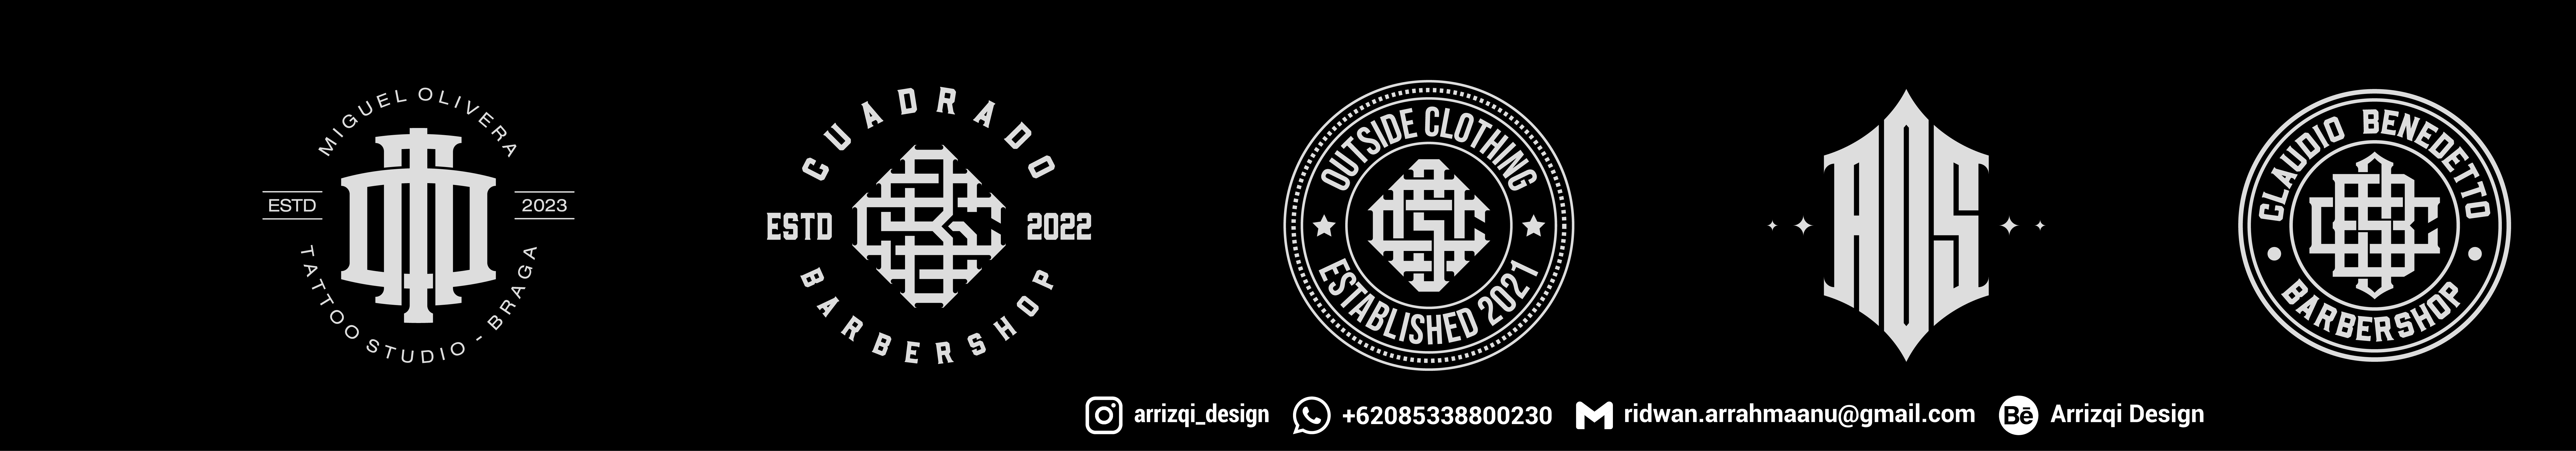 Arrizqi Design's profile banner